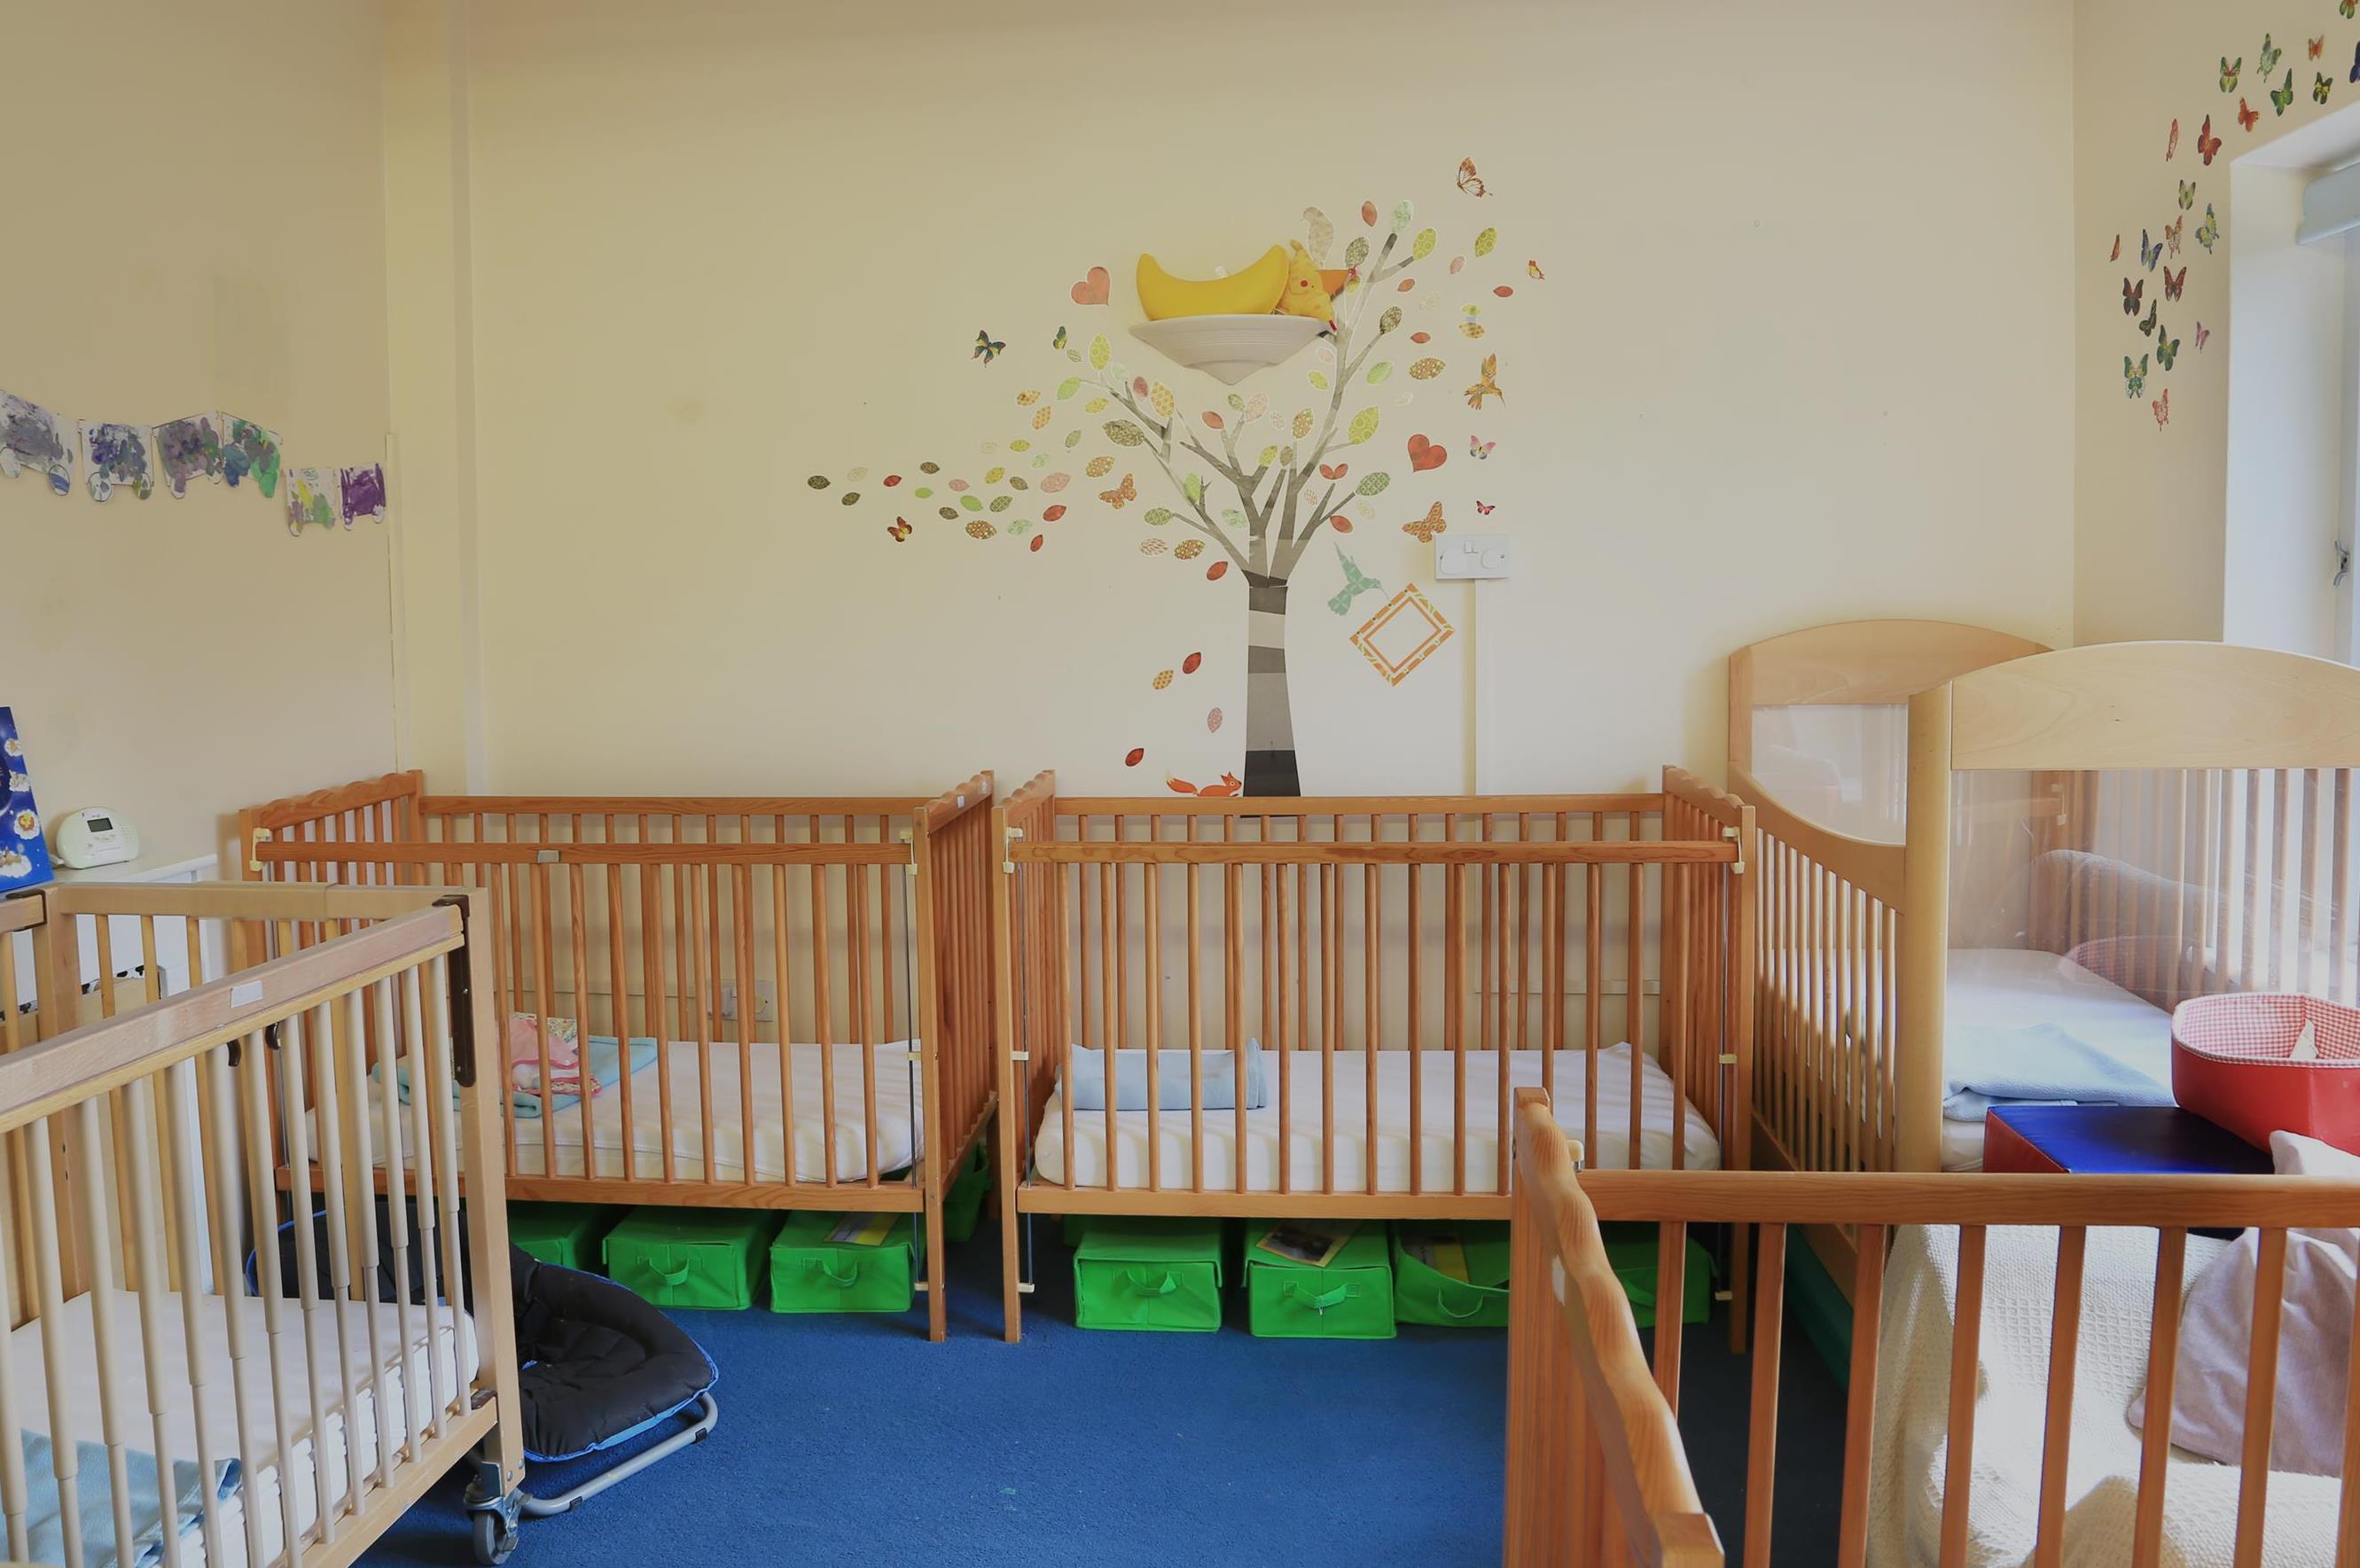 Bright Horizons Maidstone Day Nursery and Preschool (Closed) Maidstone 03301 347493